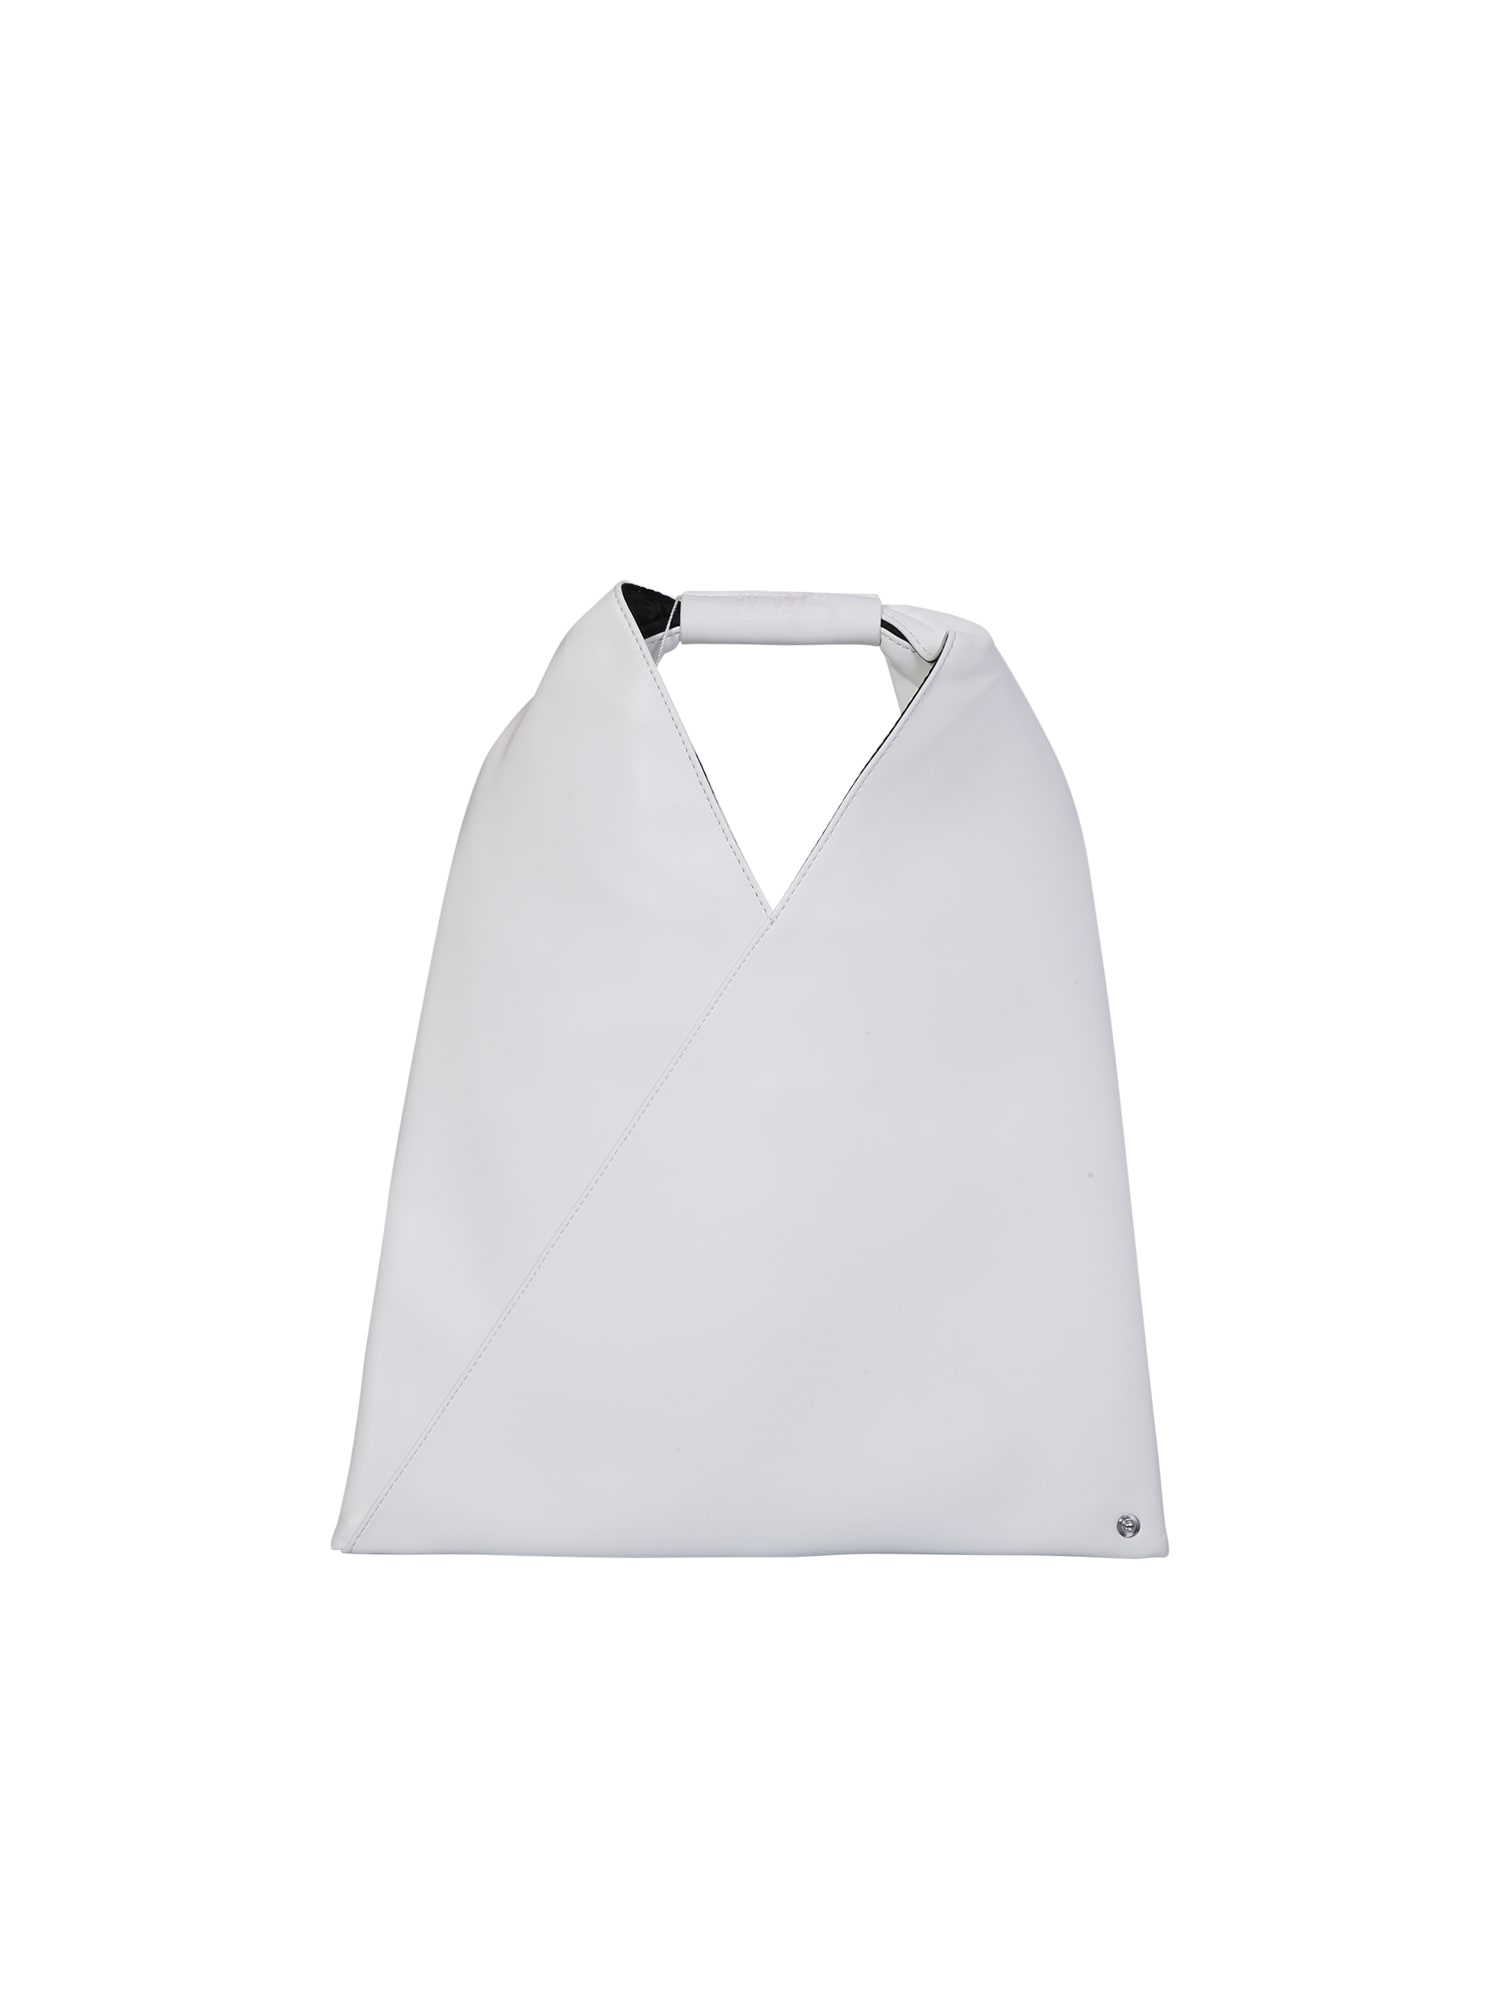 MM6 Maison Margiela White Small Japanese Tote Bag